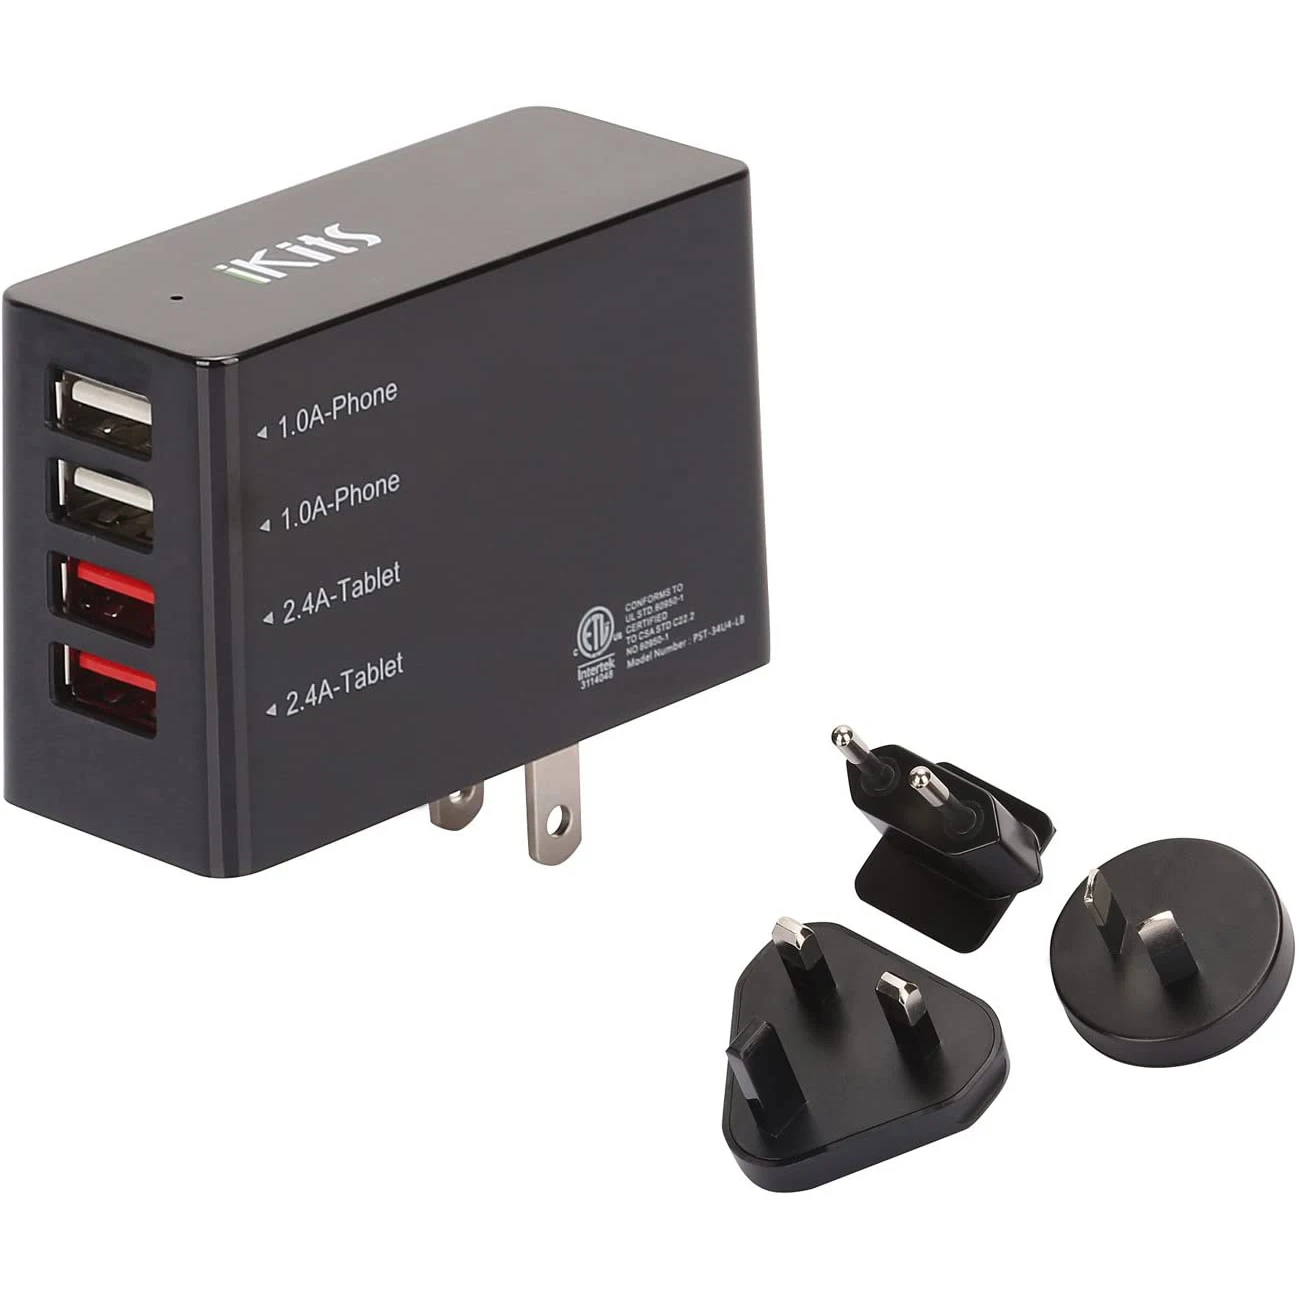 

Universal Multiple USB Wall Charger CB/ETL Certified Smart IC International Travel Adapter with US UK EU AU Plug